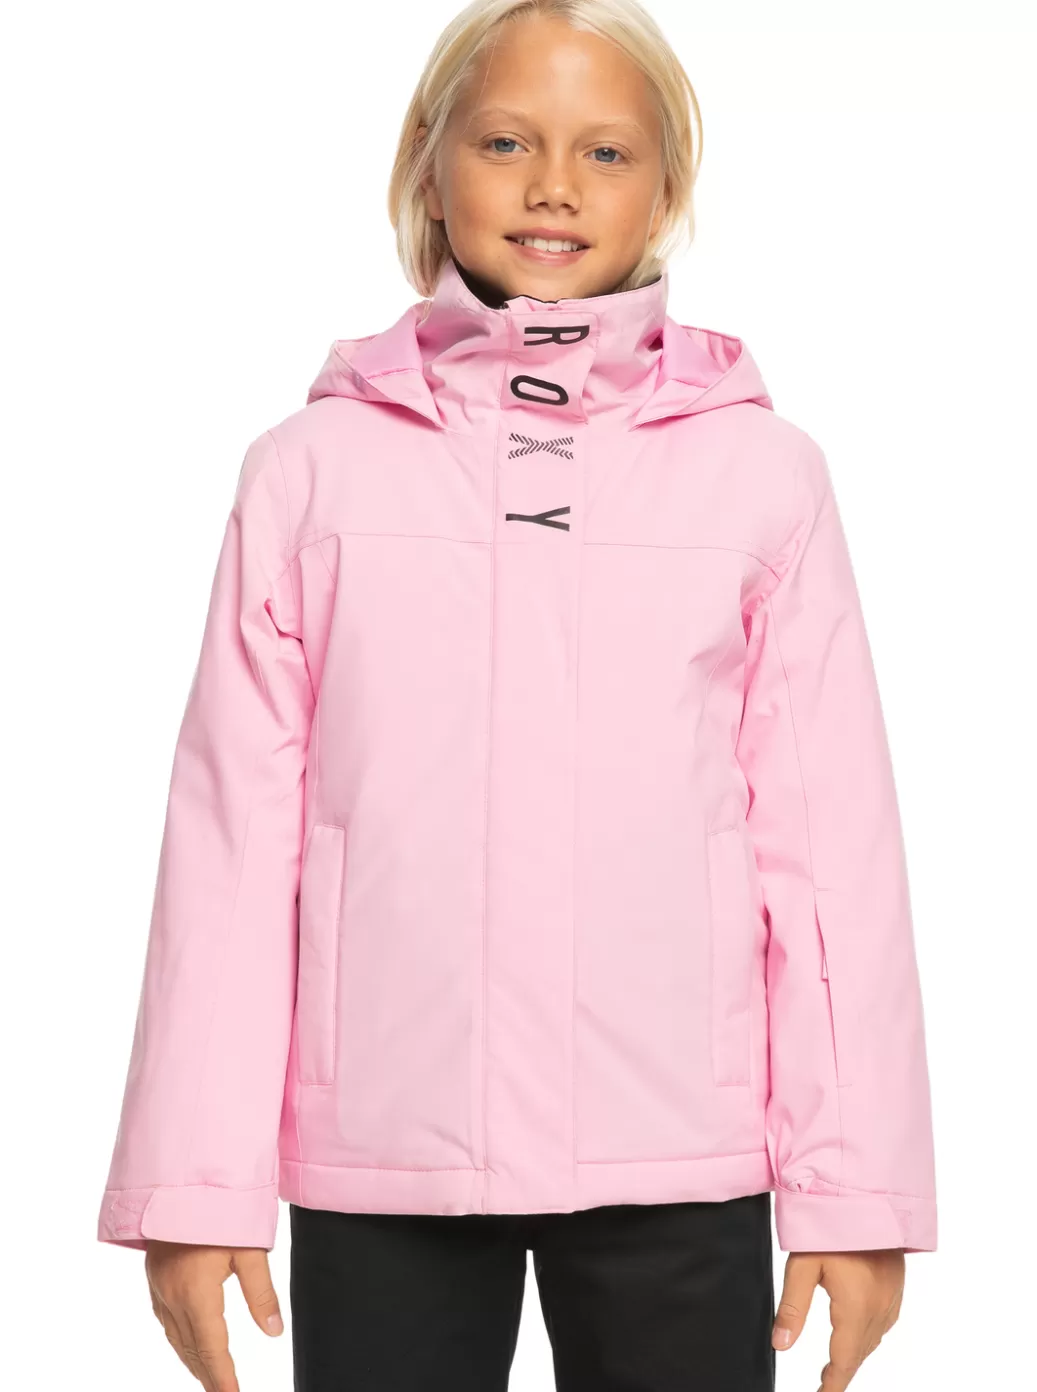 Snow Jackets | Girls Snow | KIDS | WOMEN ROXY Girl's 4-16 Galaxy Technical Snow Jacket Pink Frosting